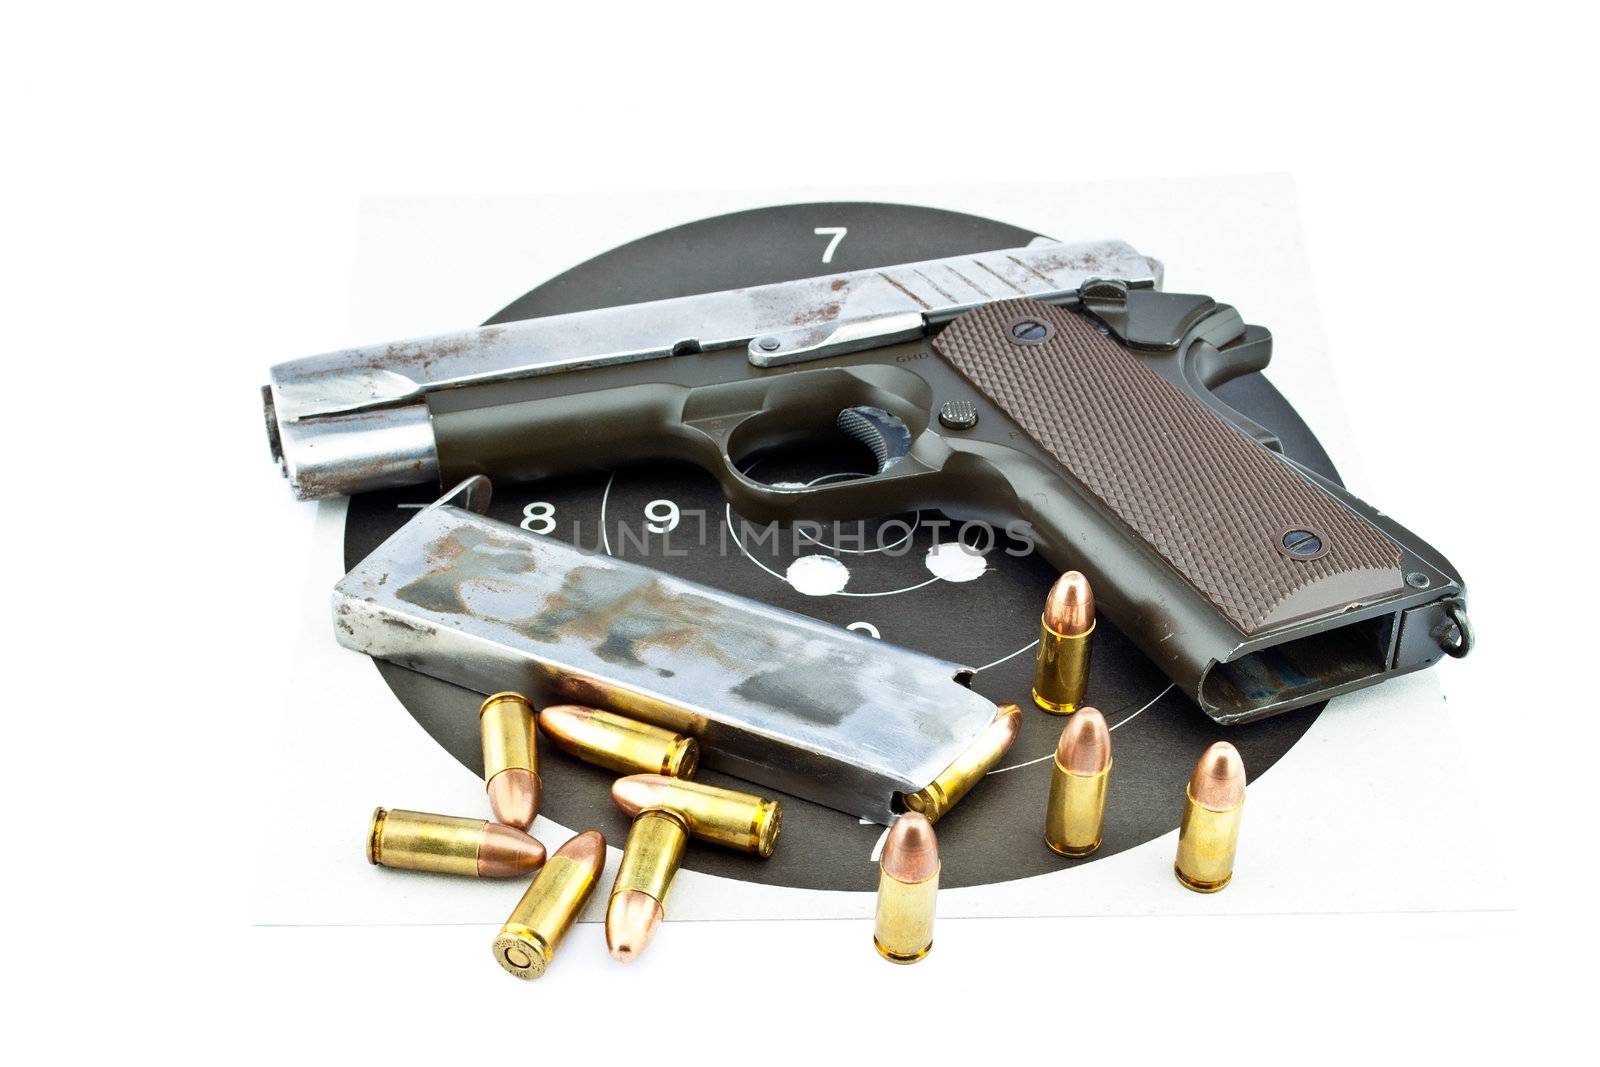 9-mm handgun and target shooting by Yuri2012